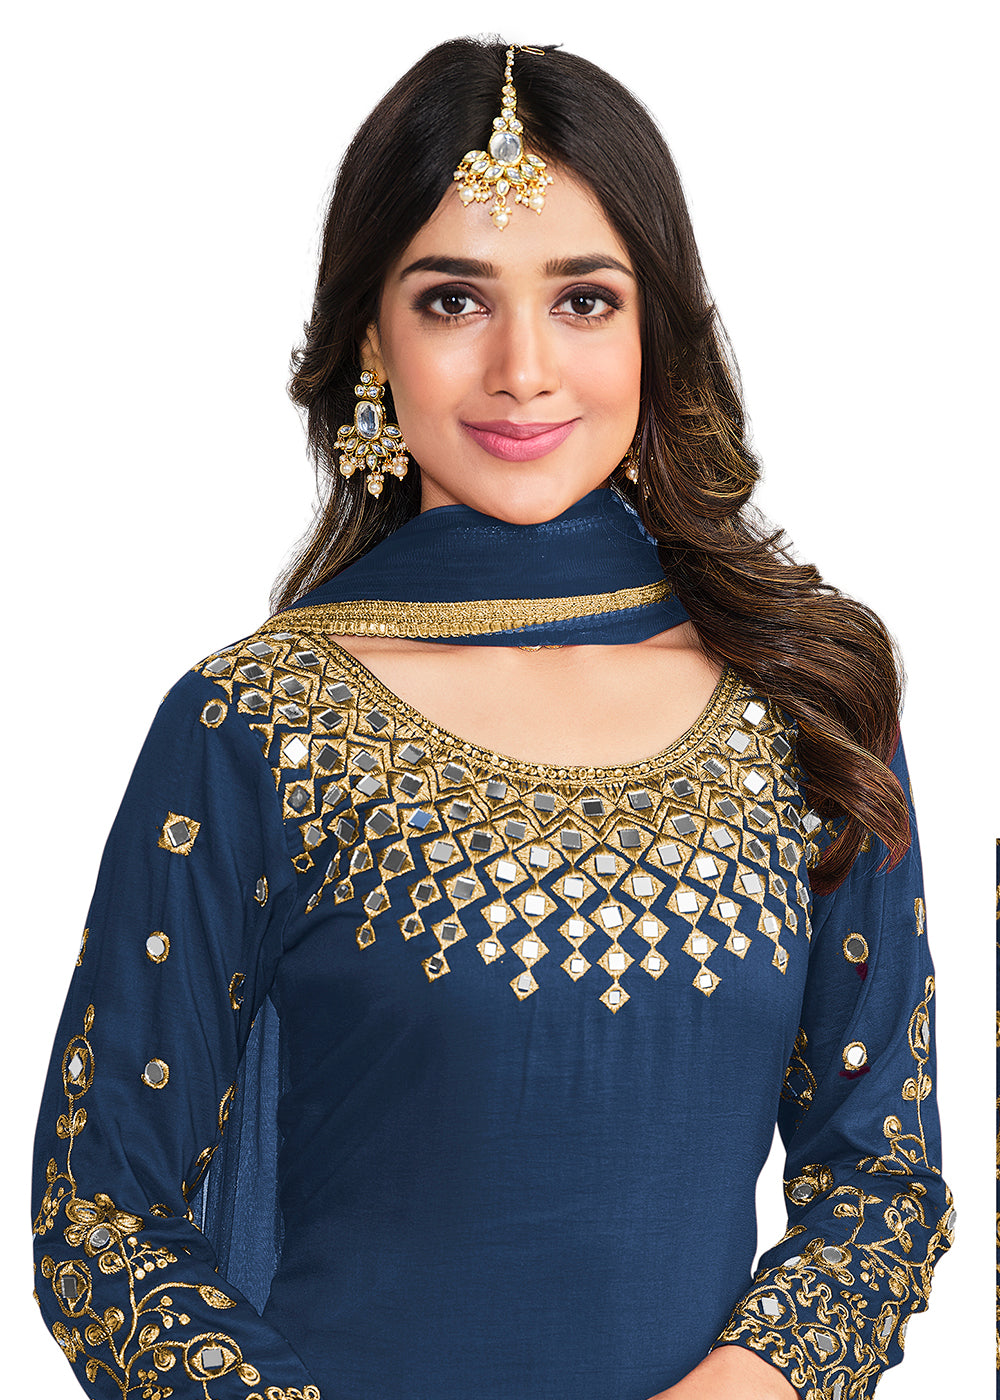 Buy Now Punjabi Style Blue Silk Mirror Work Patiala Suit Online in USA, UK, Canada & Worldwide at Empress Clothing.